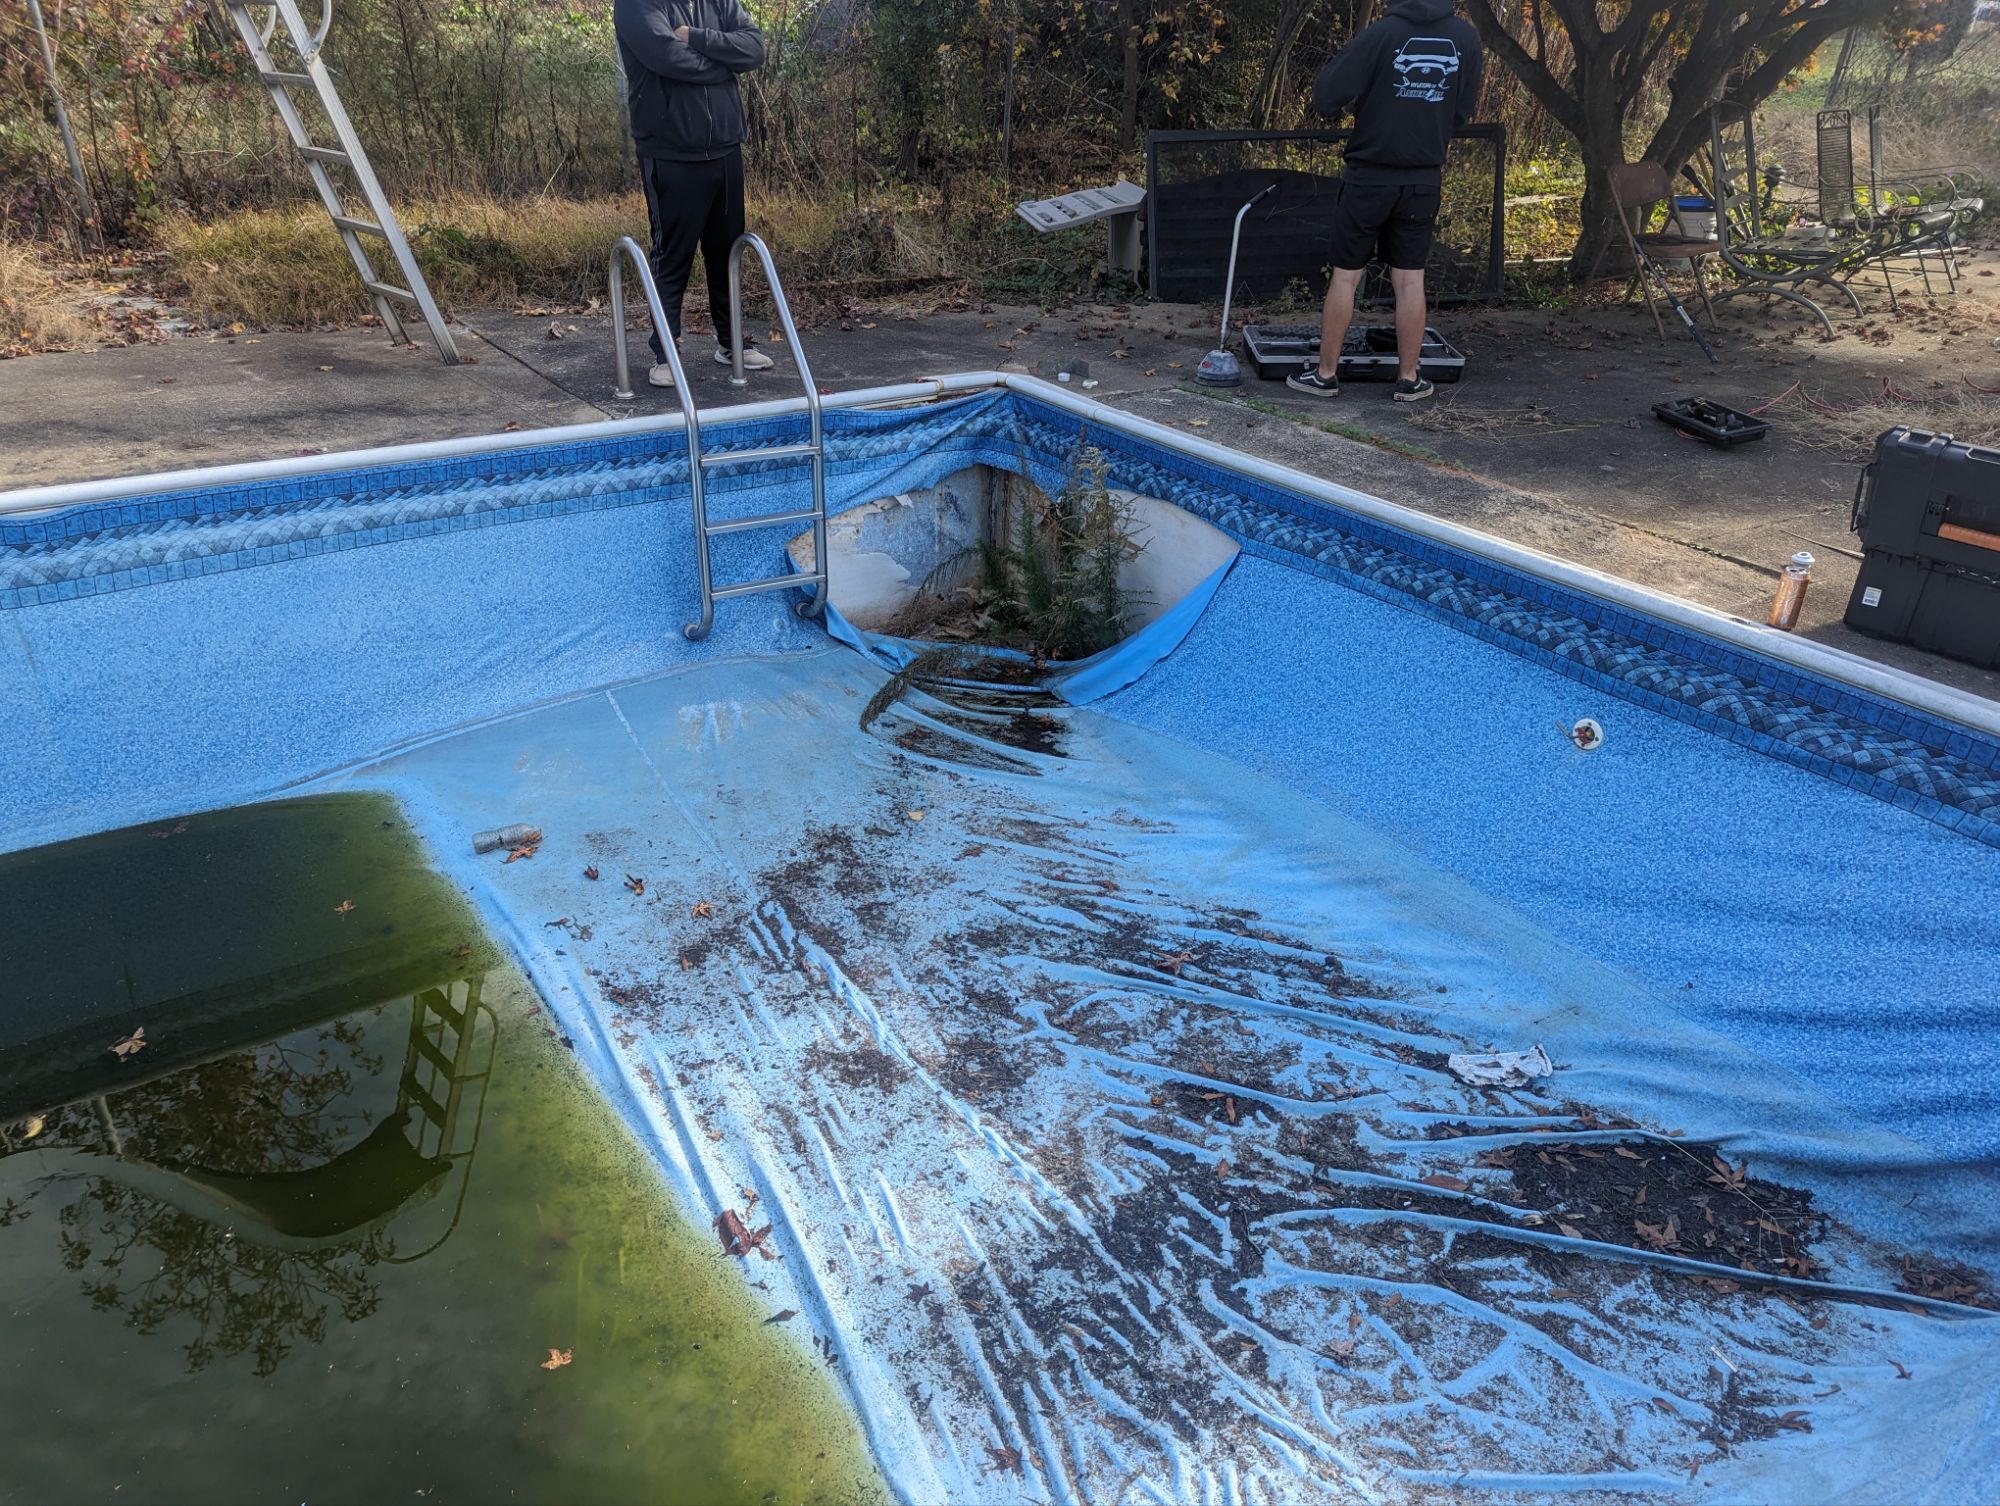 Pool Leak Repair? Fix It With These Tricks!